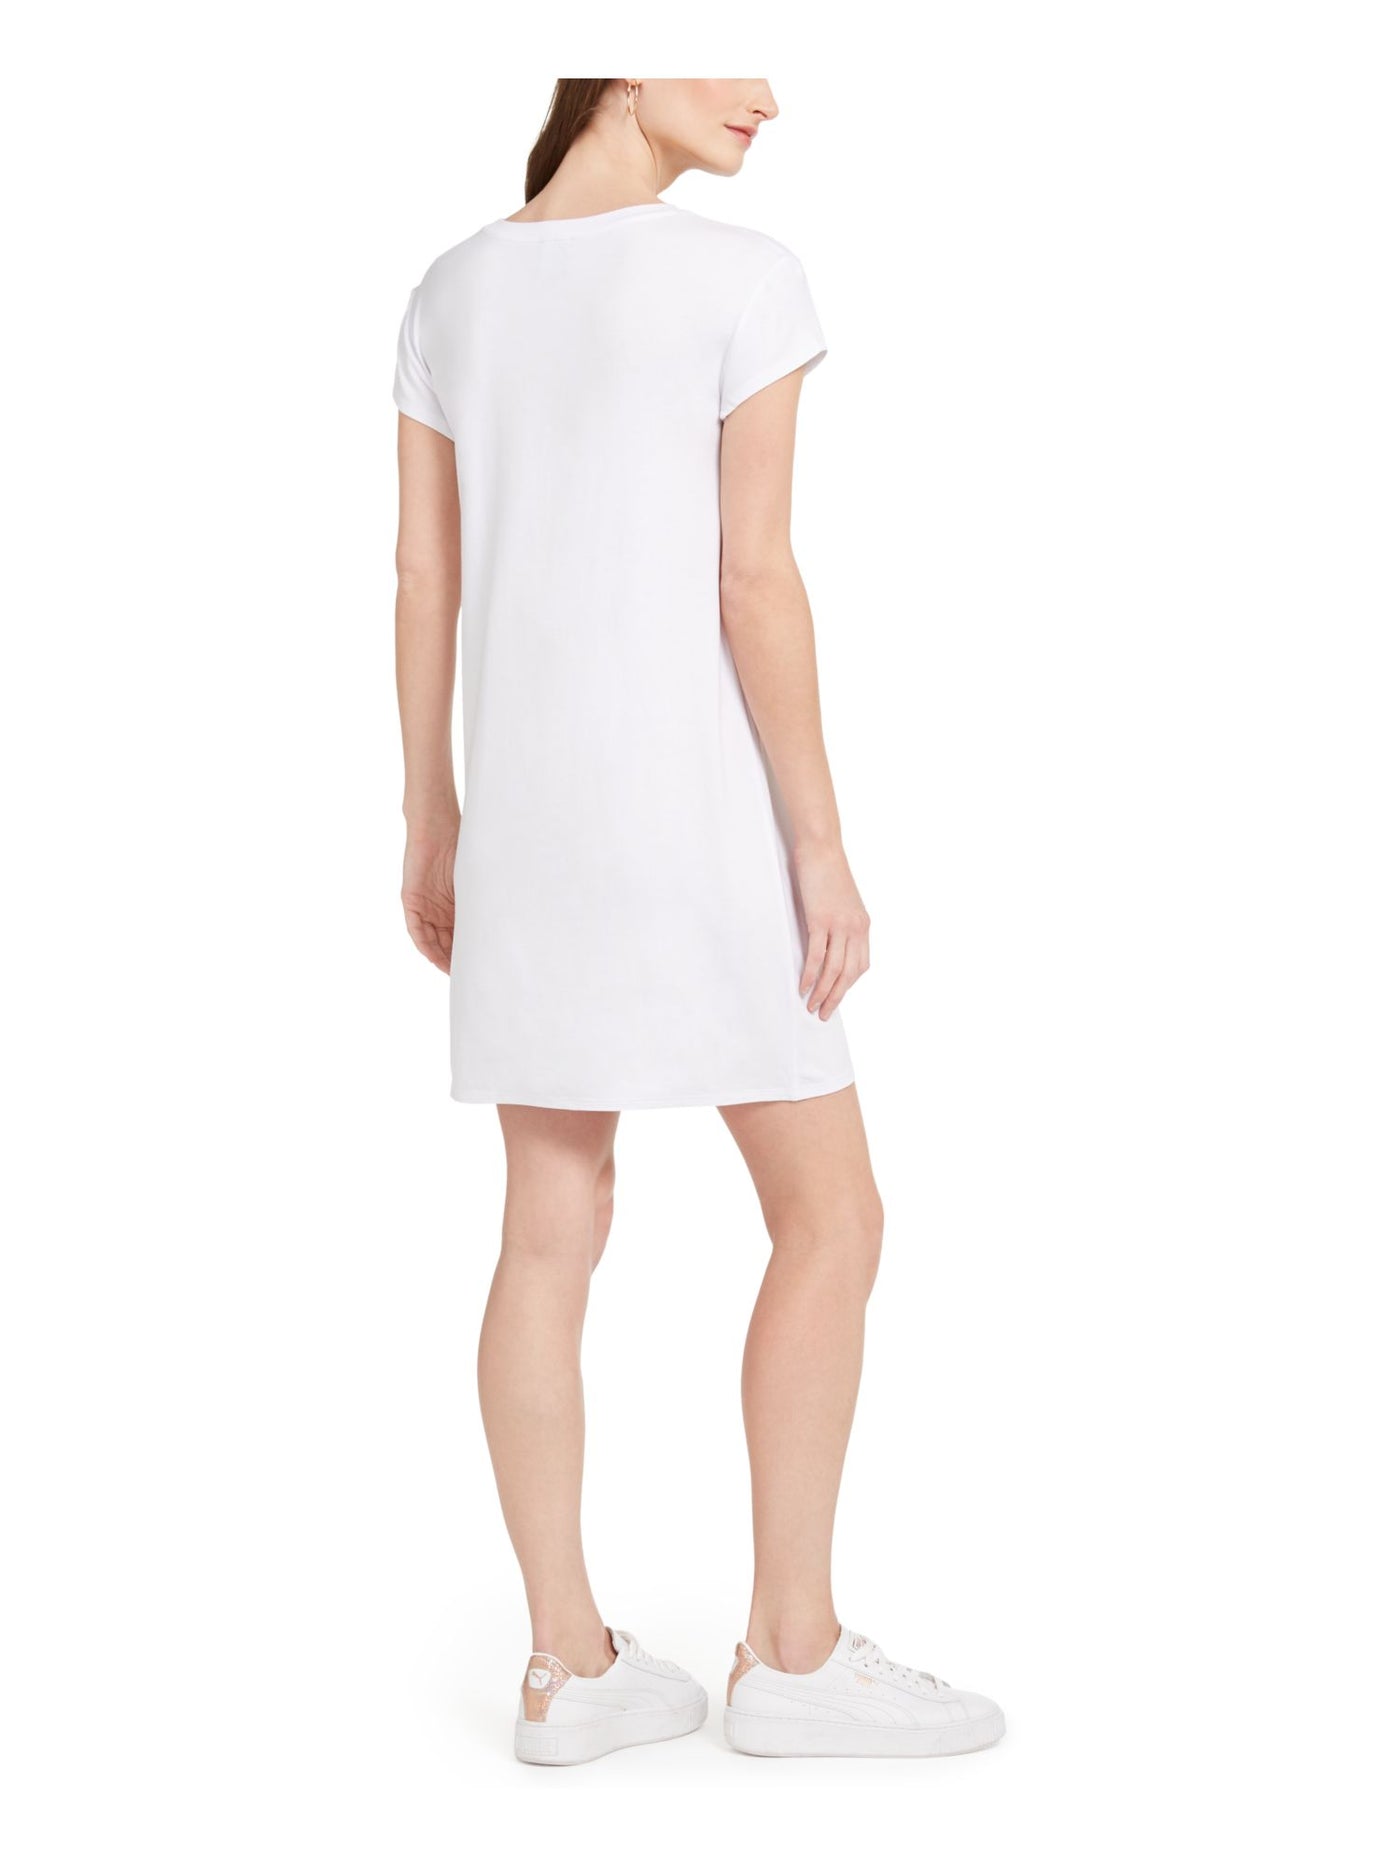 ADRIANNA PAPELL Womens White Logo Graphic Short Sleeve Jewel Neck Short Shift Dress XS